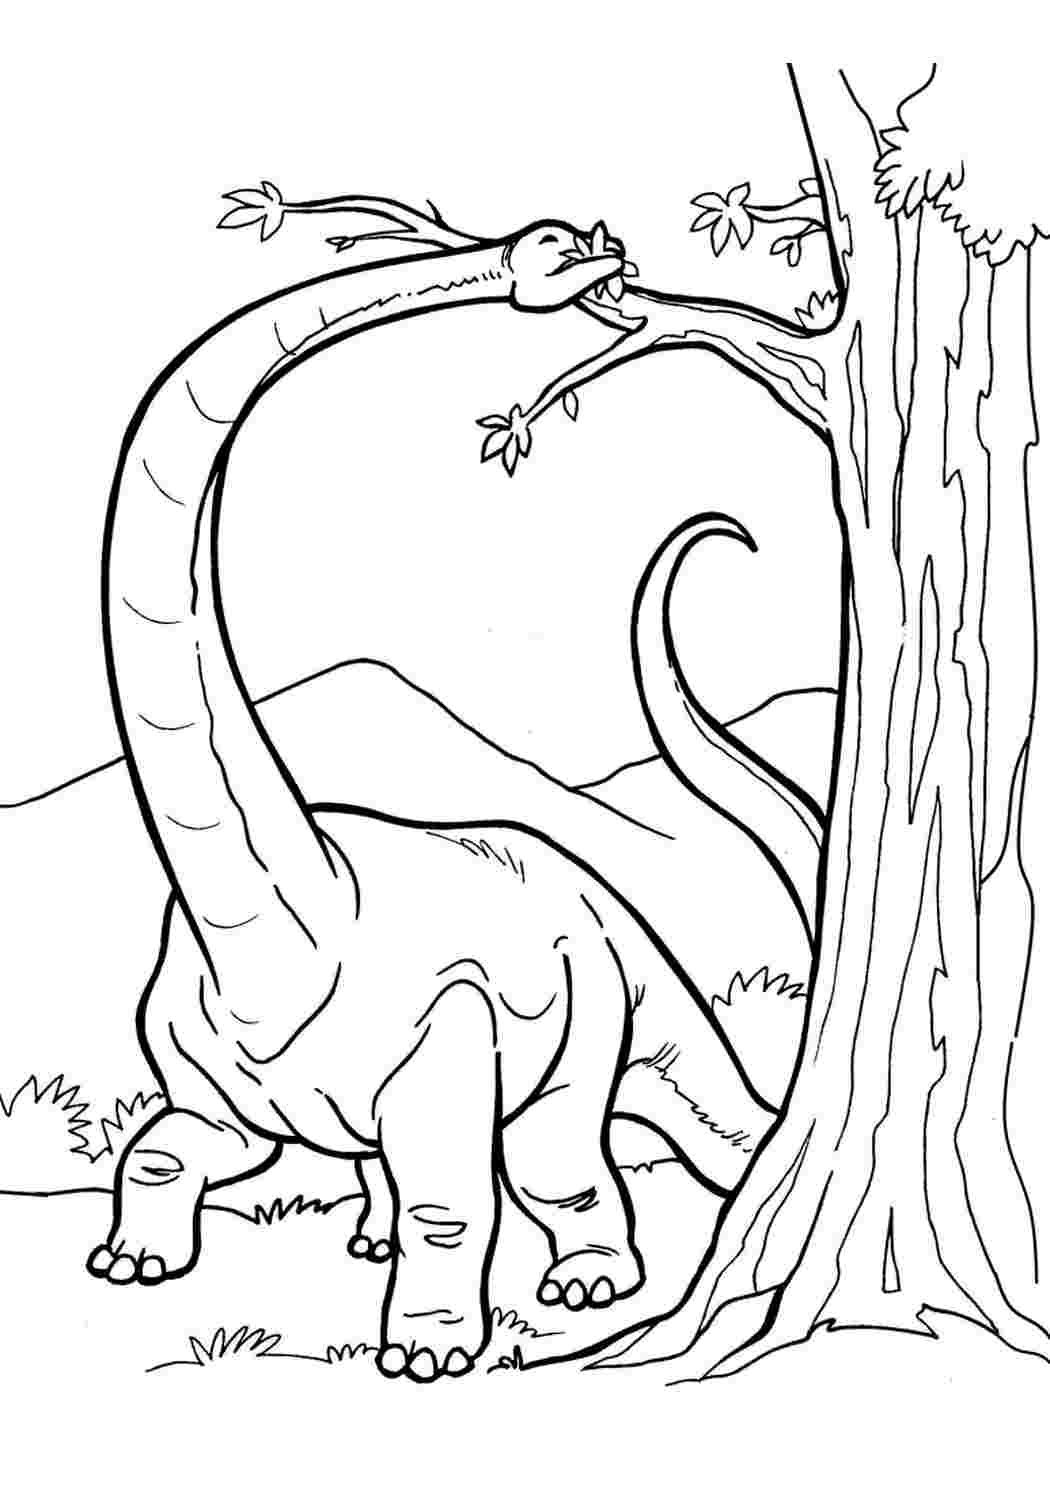 Динозавры раскраска а4. Раскраска динозавр Диплодок. Динозавры раскраски Диплодок Диплодок. Динозавры раскраска типлодог. Раскраска динозавр Бронтозавр.